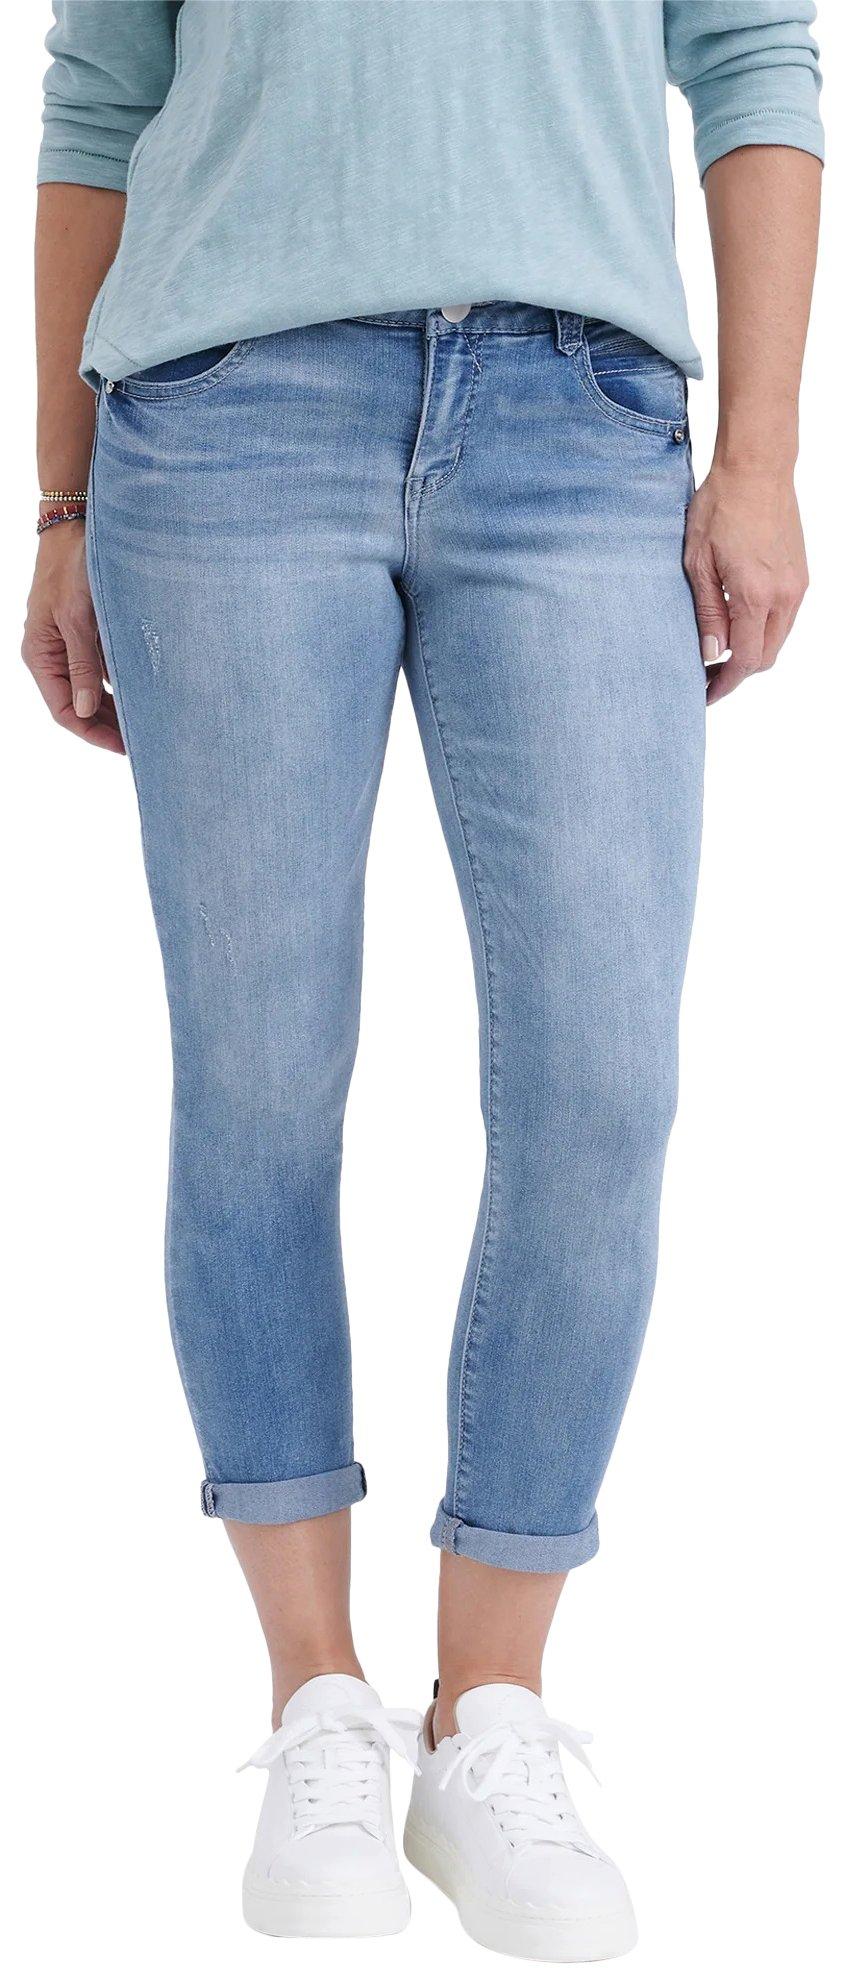 Womens 25 in. Hi-Rise Ab Tech Stretch Jeans